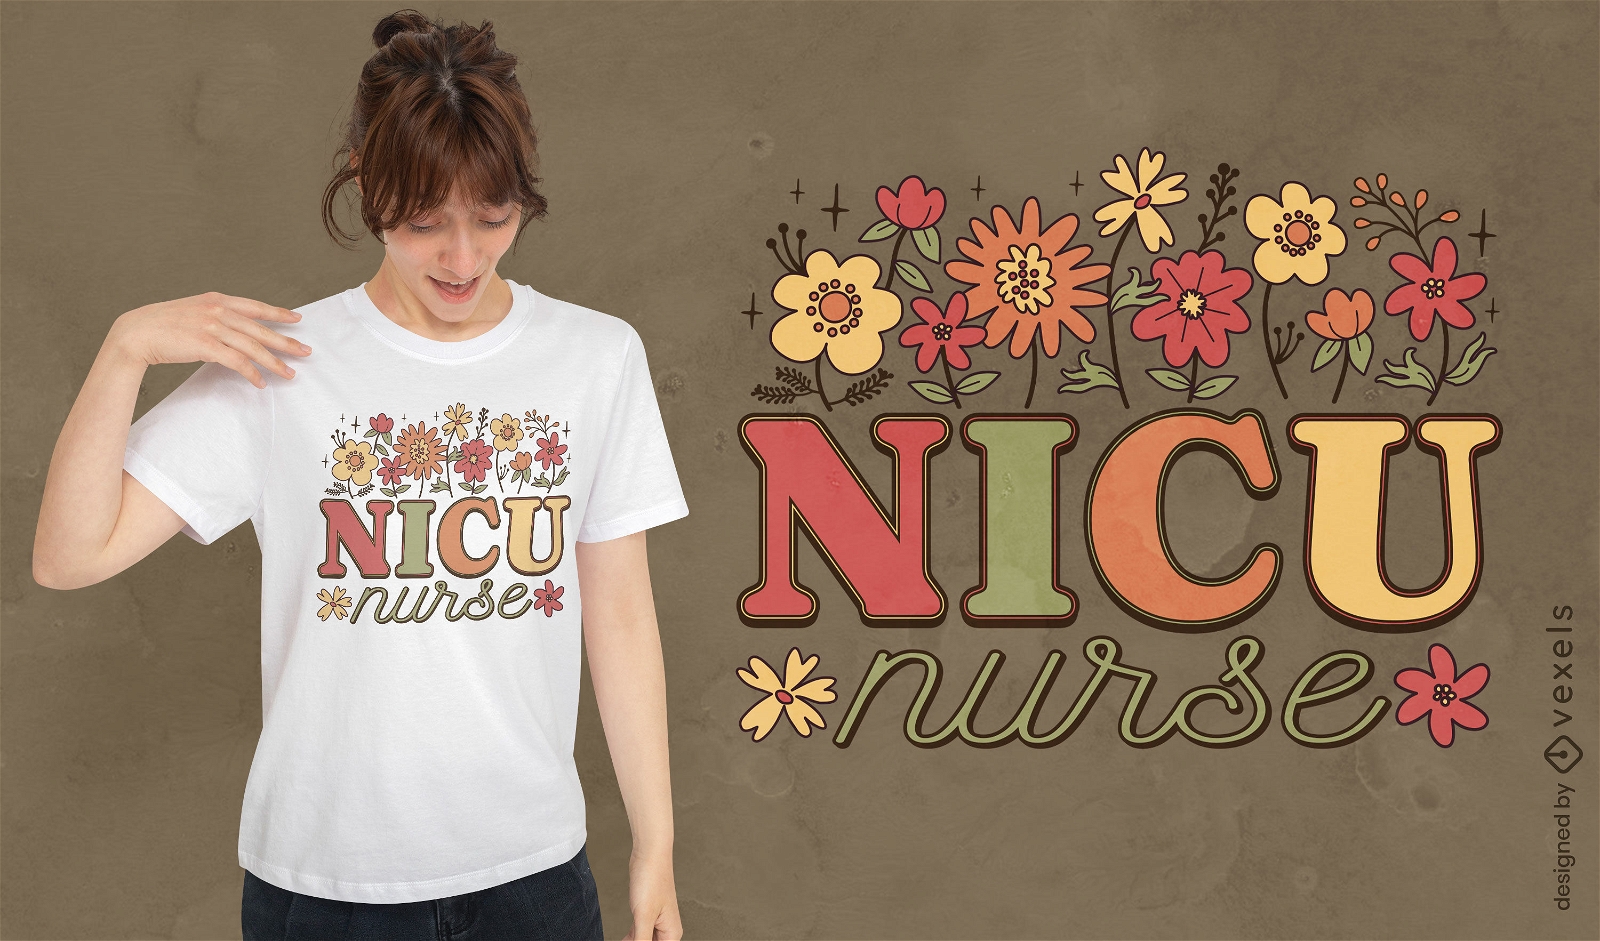 NICU nurse floral t-shirt design